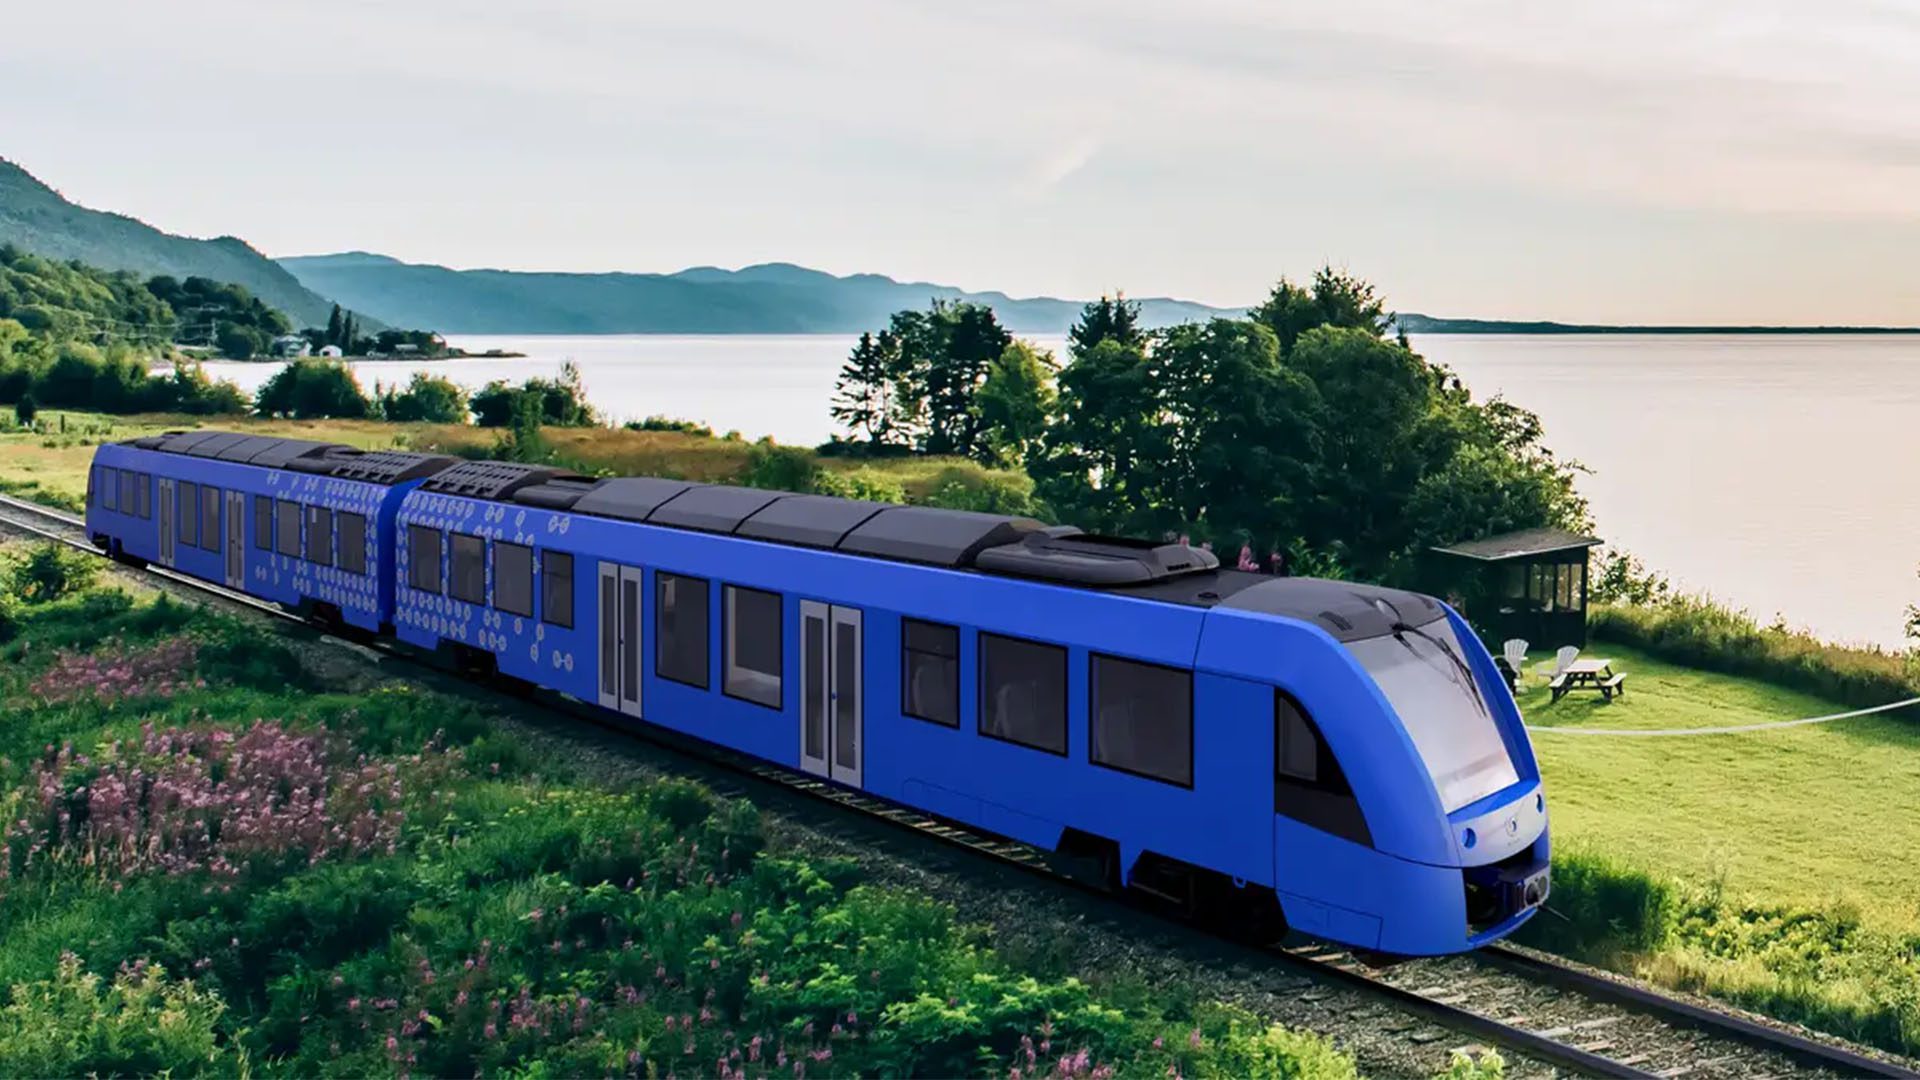 North America's first hydrogen-powered passenger train